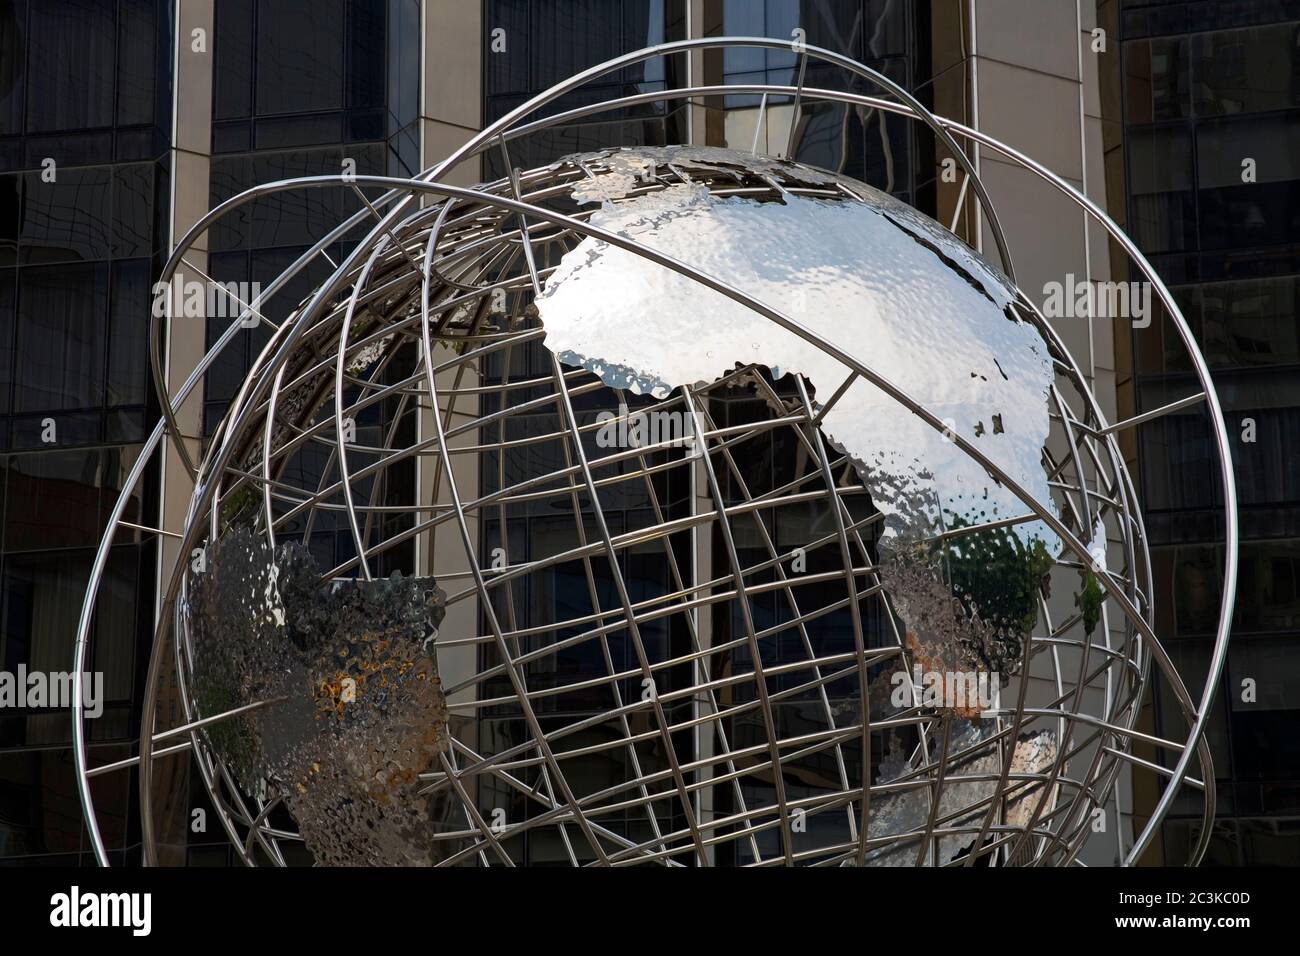 Globe by Brandell fuori dall'hotel internazionale Trump, Columbus Circle, Midtown Manhattan, New York City, Stati Uniti Foto Stock